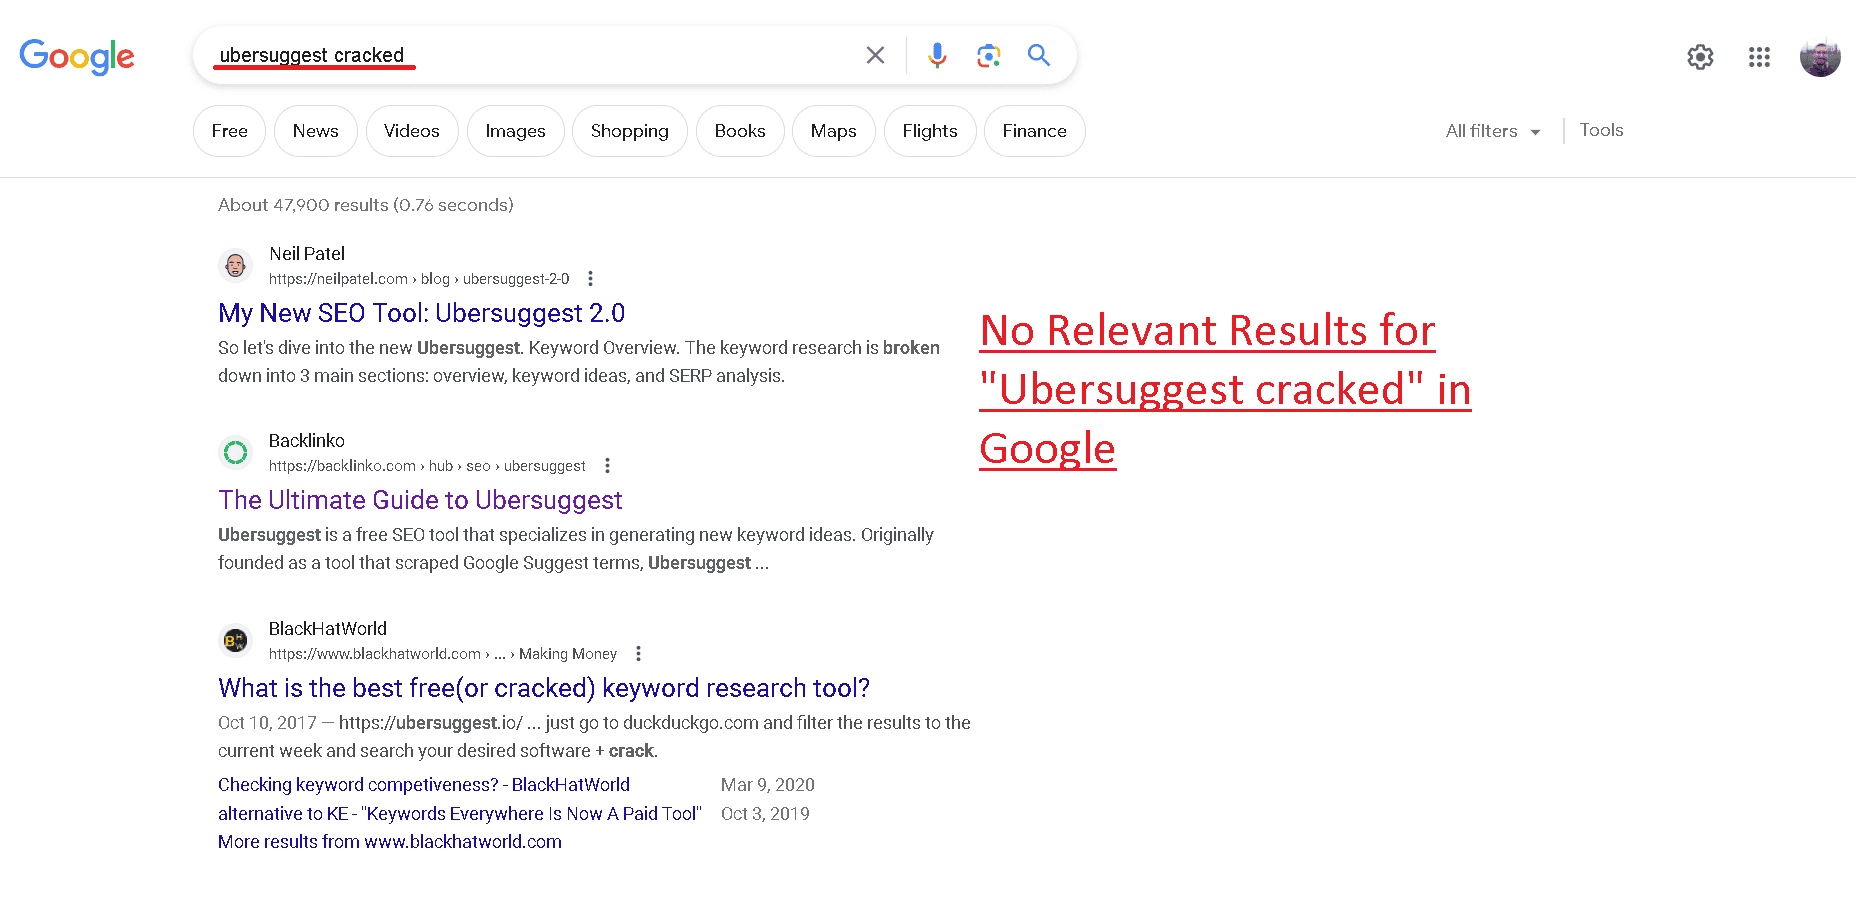 Ubersuggest cracked version no relevant result in Google